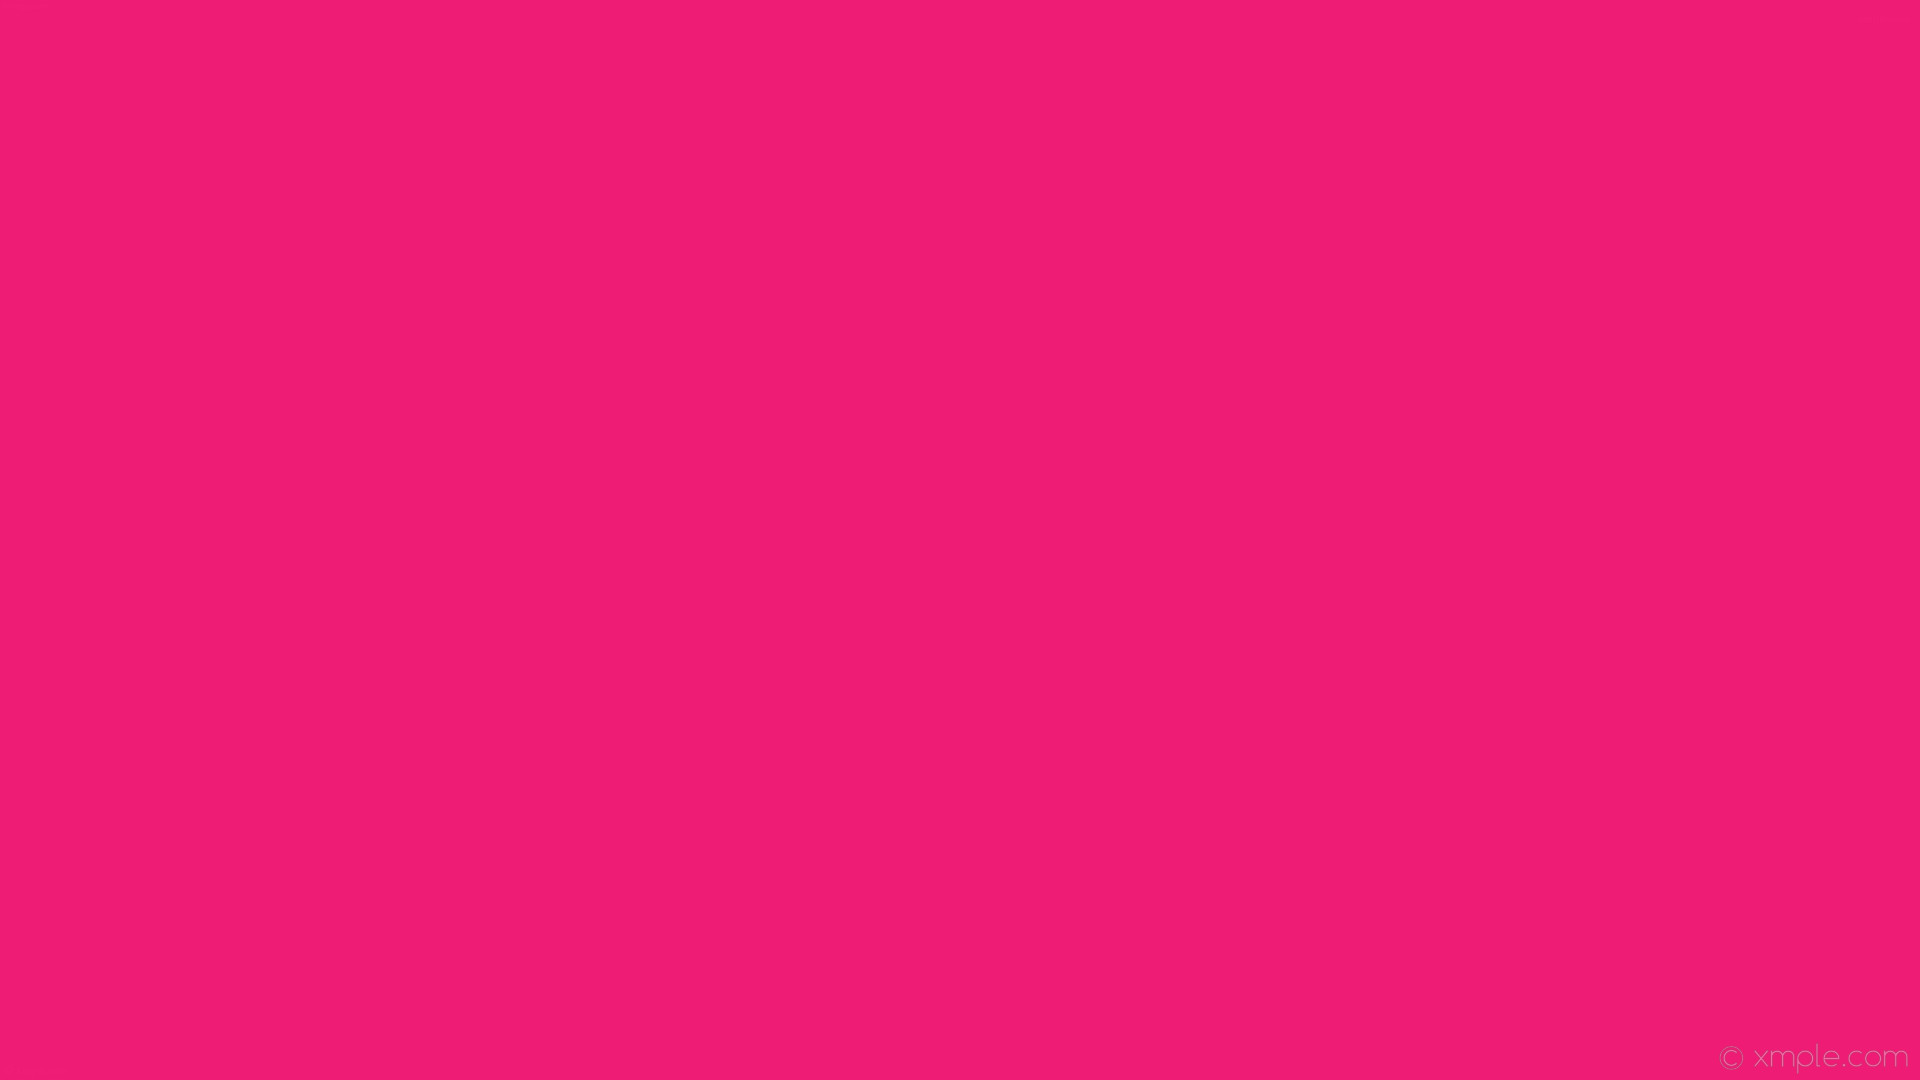 1920x1080 wallpaper plain solid color pink single one colour #ef1c75